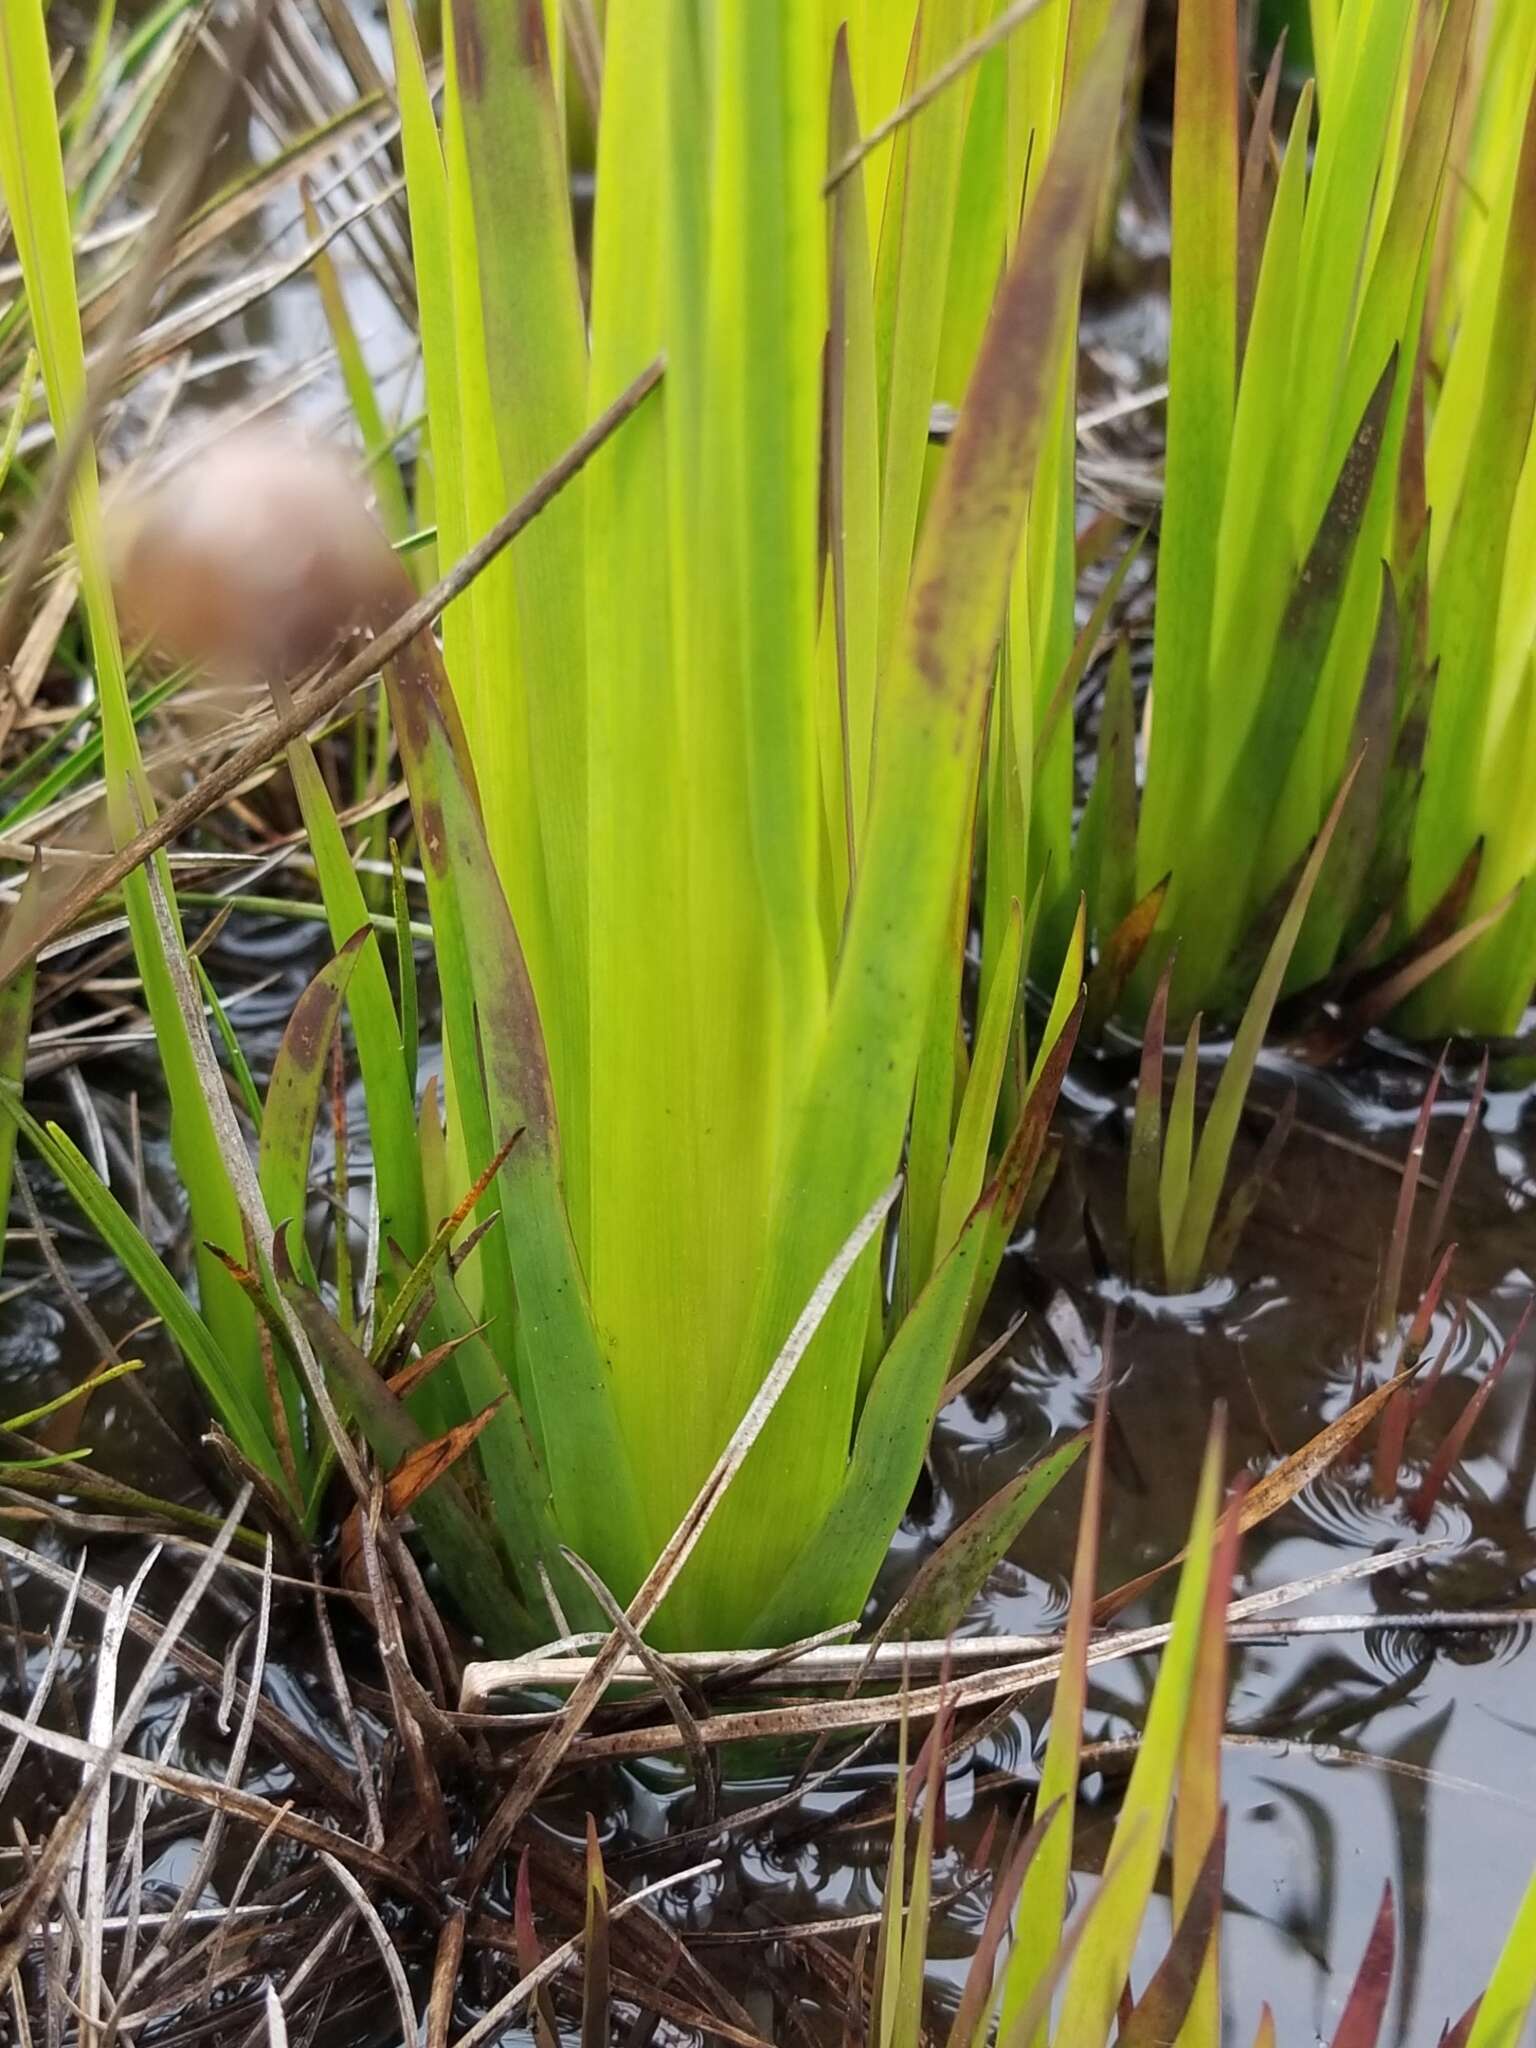 Image of Hawai'i yelloweyed grass